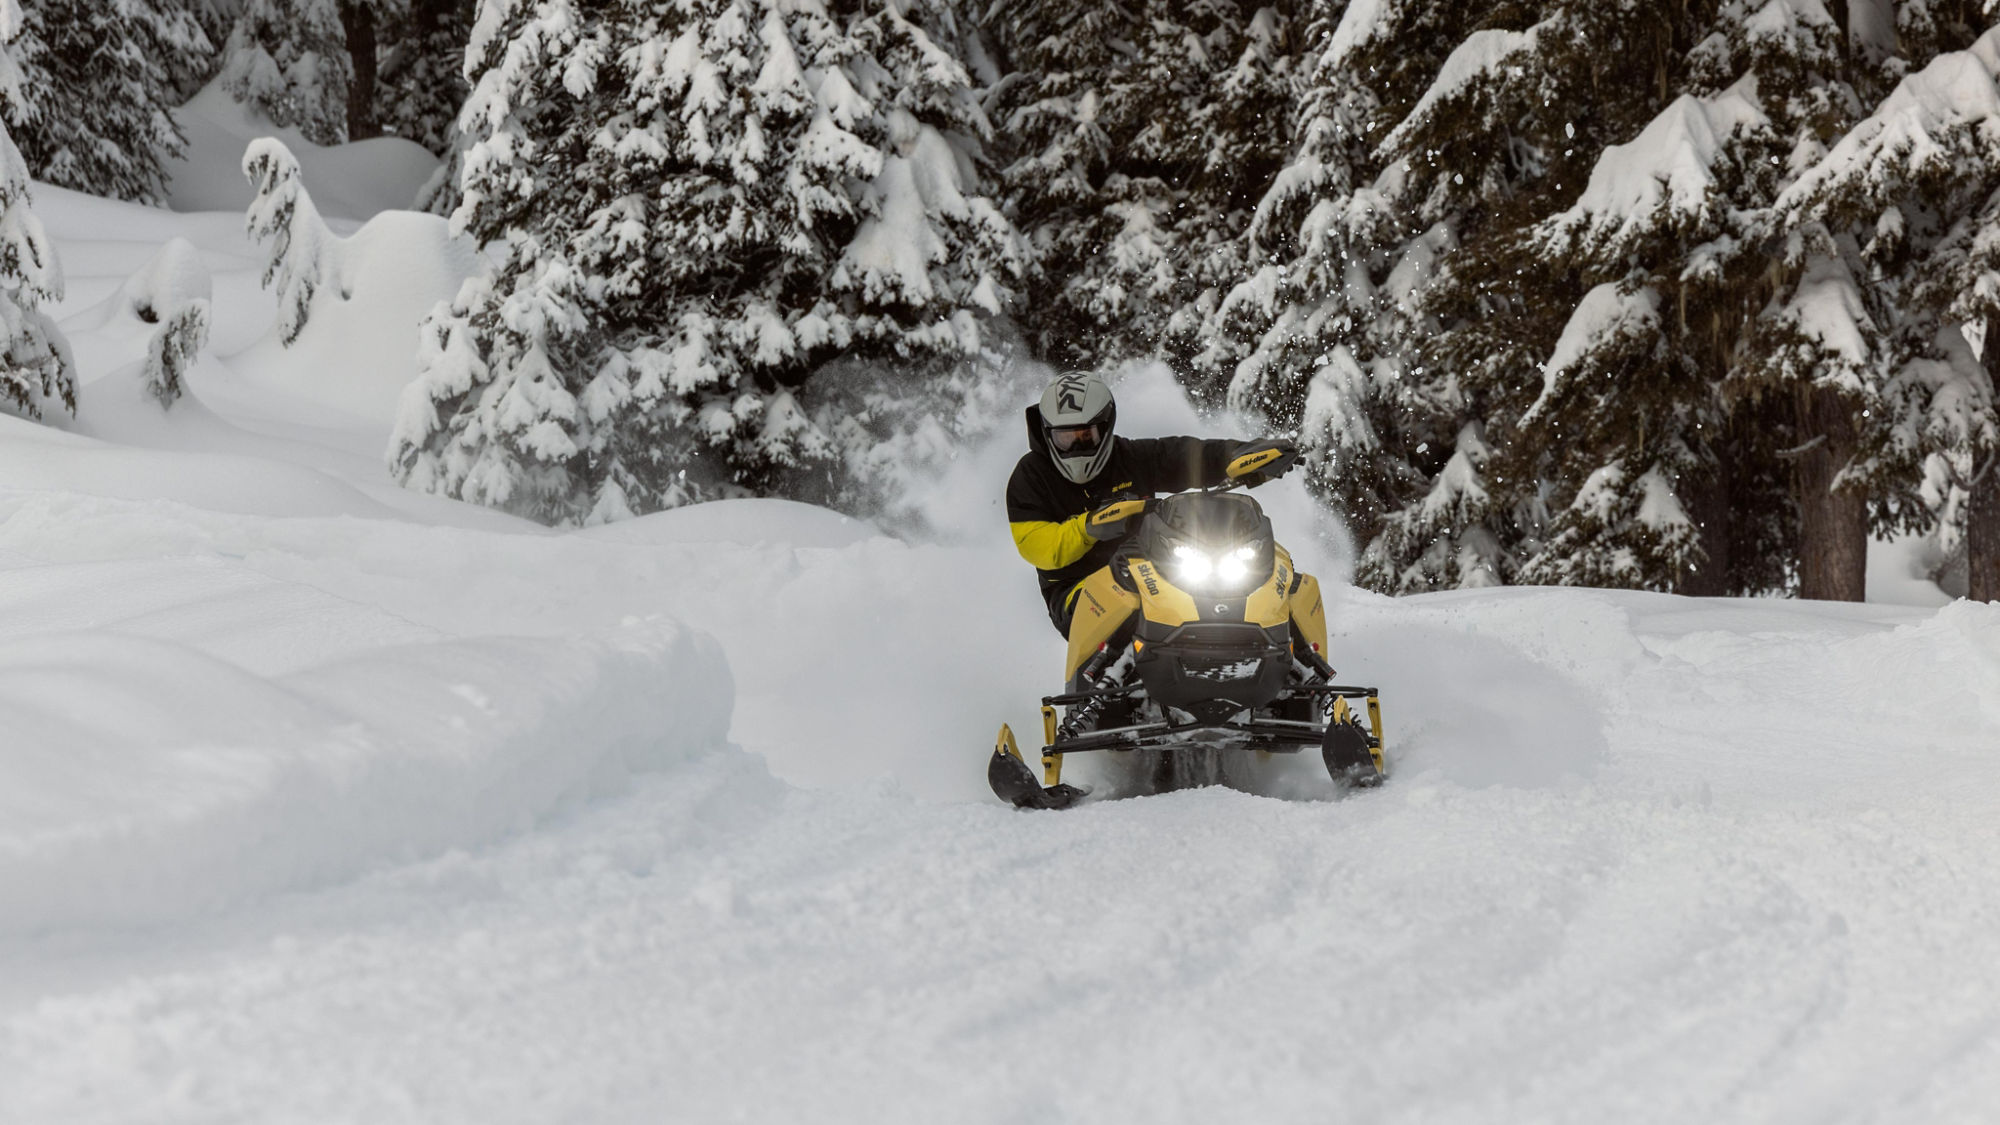 2025 Ski-Doo Crossover Backcountry snowmobile riding in deep snow